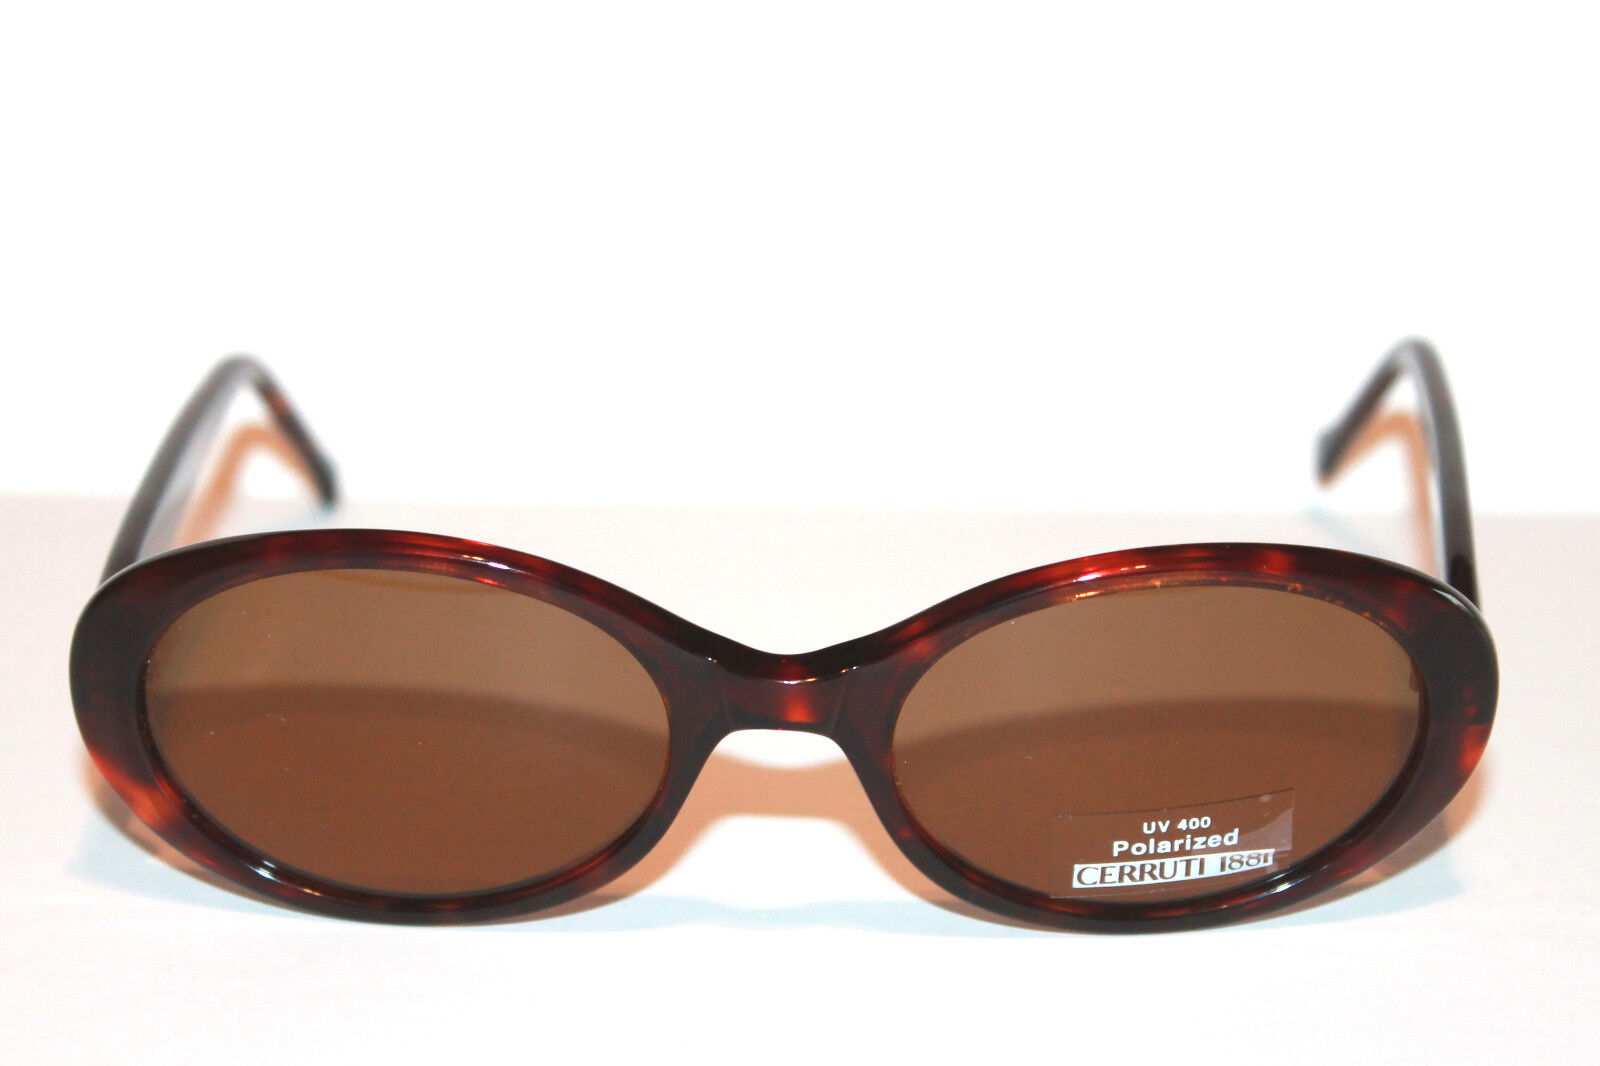 NEW Cerruti 1881 Polarized sunglasses Model 4212 New w/ leather case